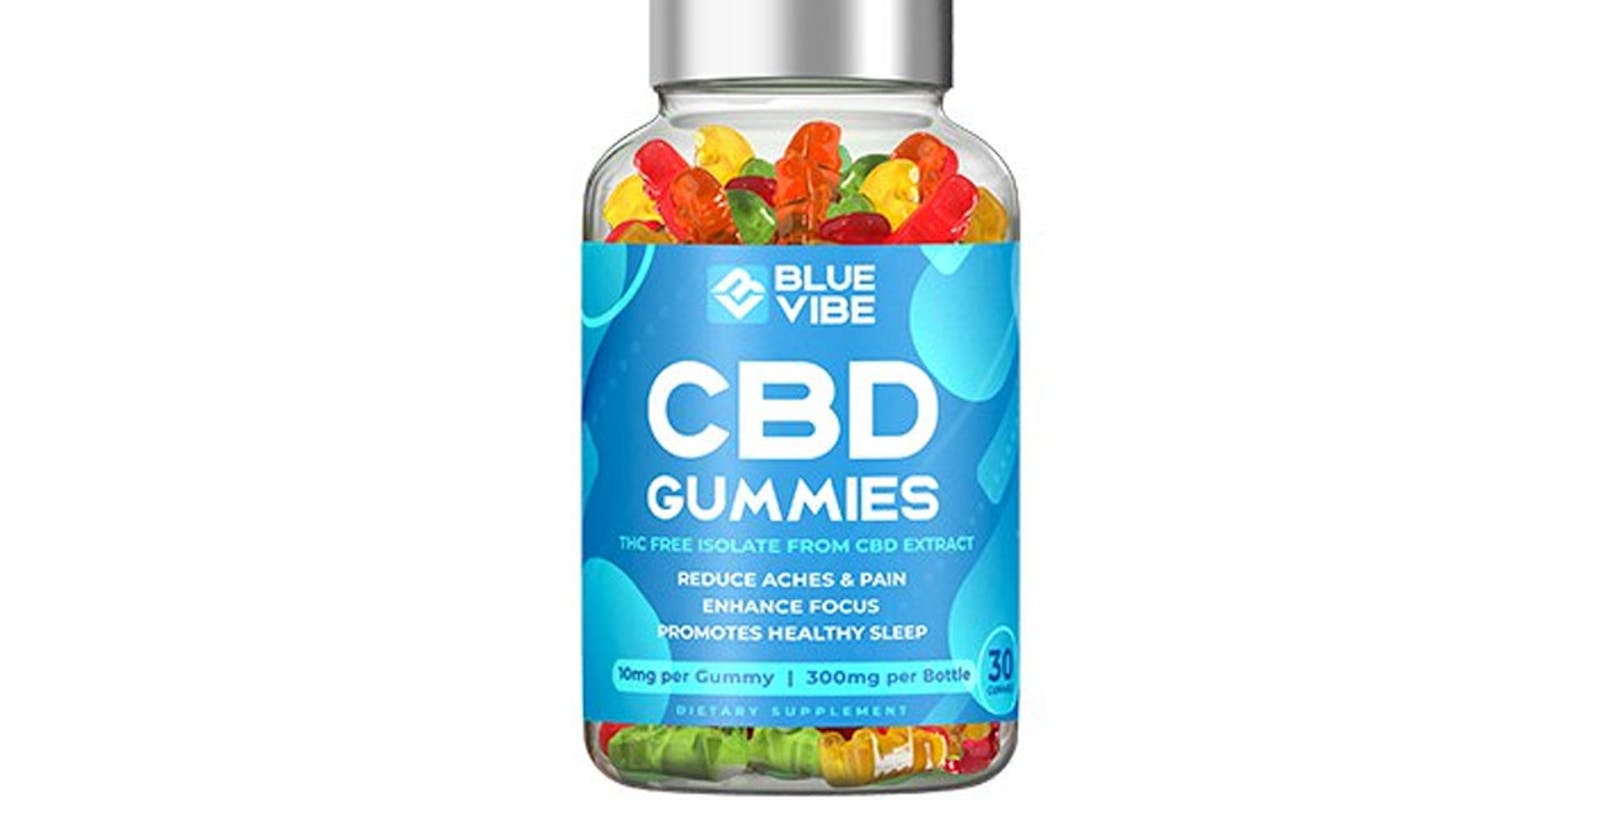 Blue Vibe CBD Gummies USA Certified